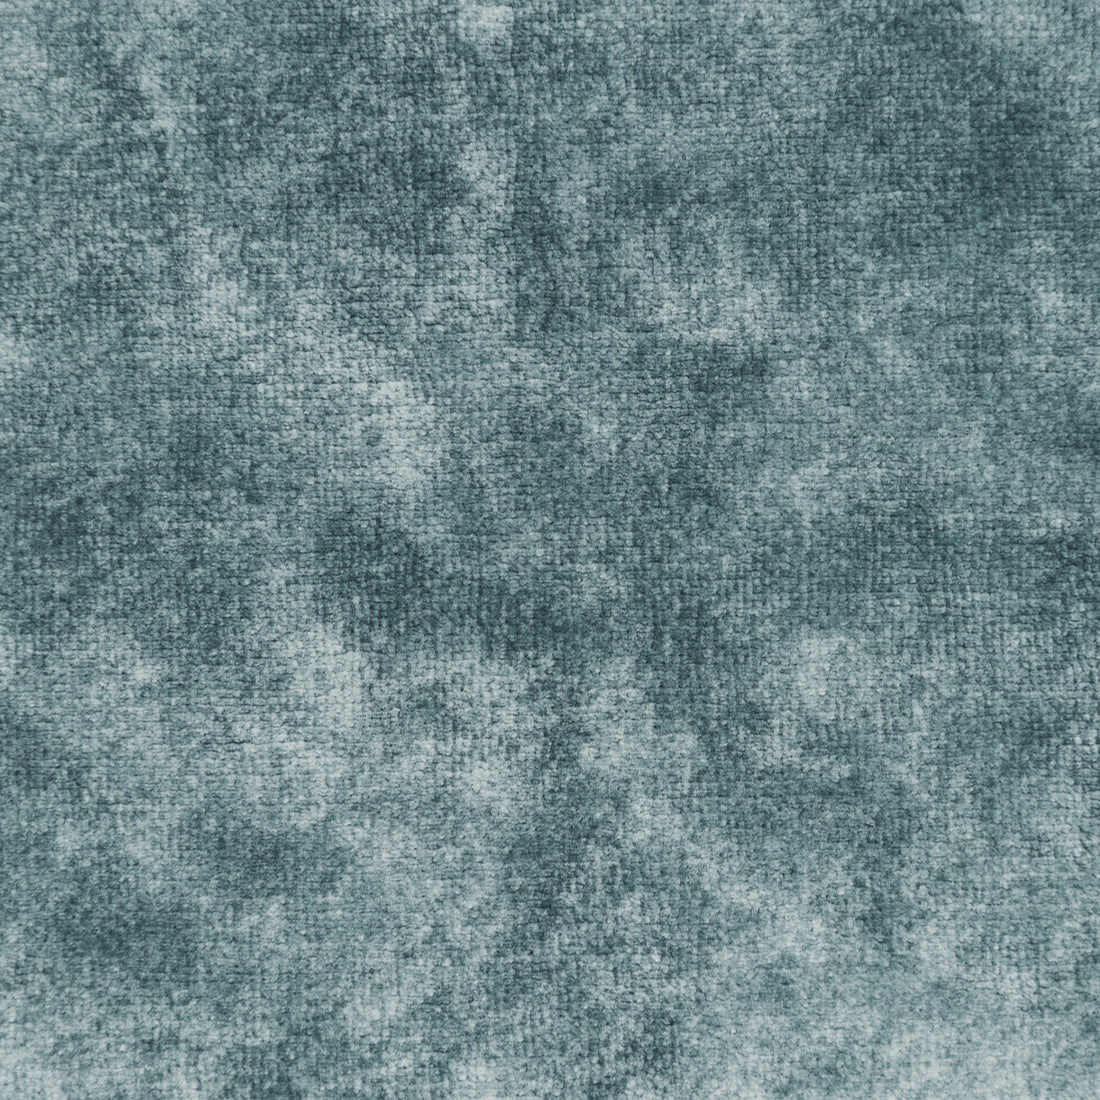 Regal Velvet fabric in glacier color - pattern 36064.15.0 - by Kravet Couture